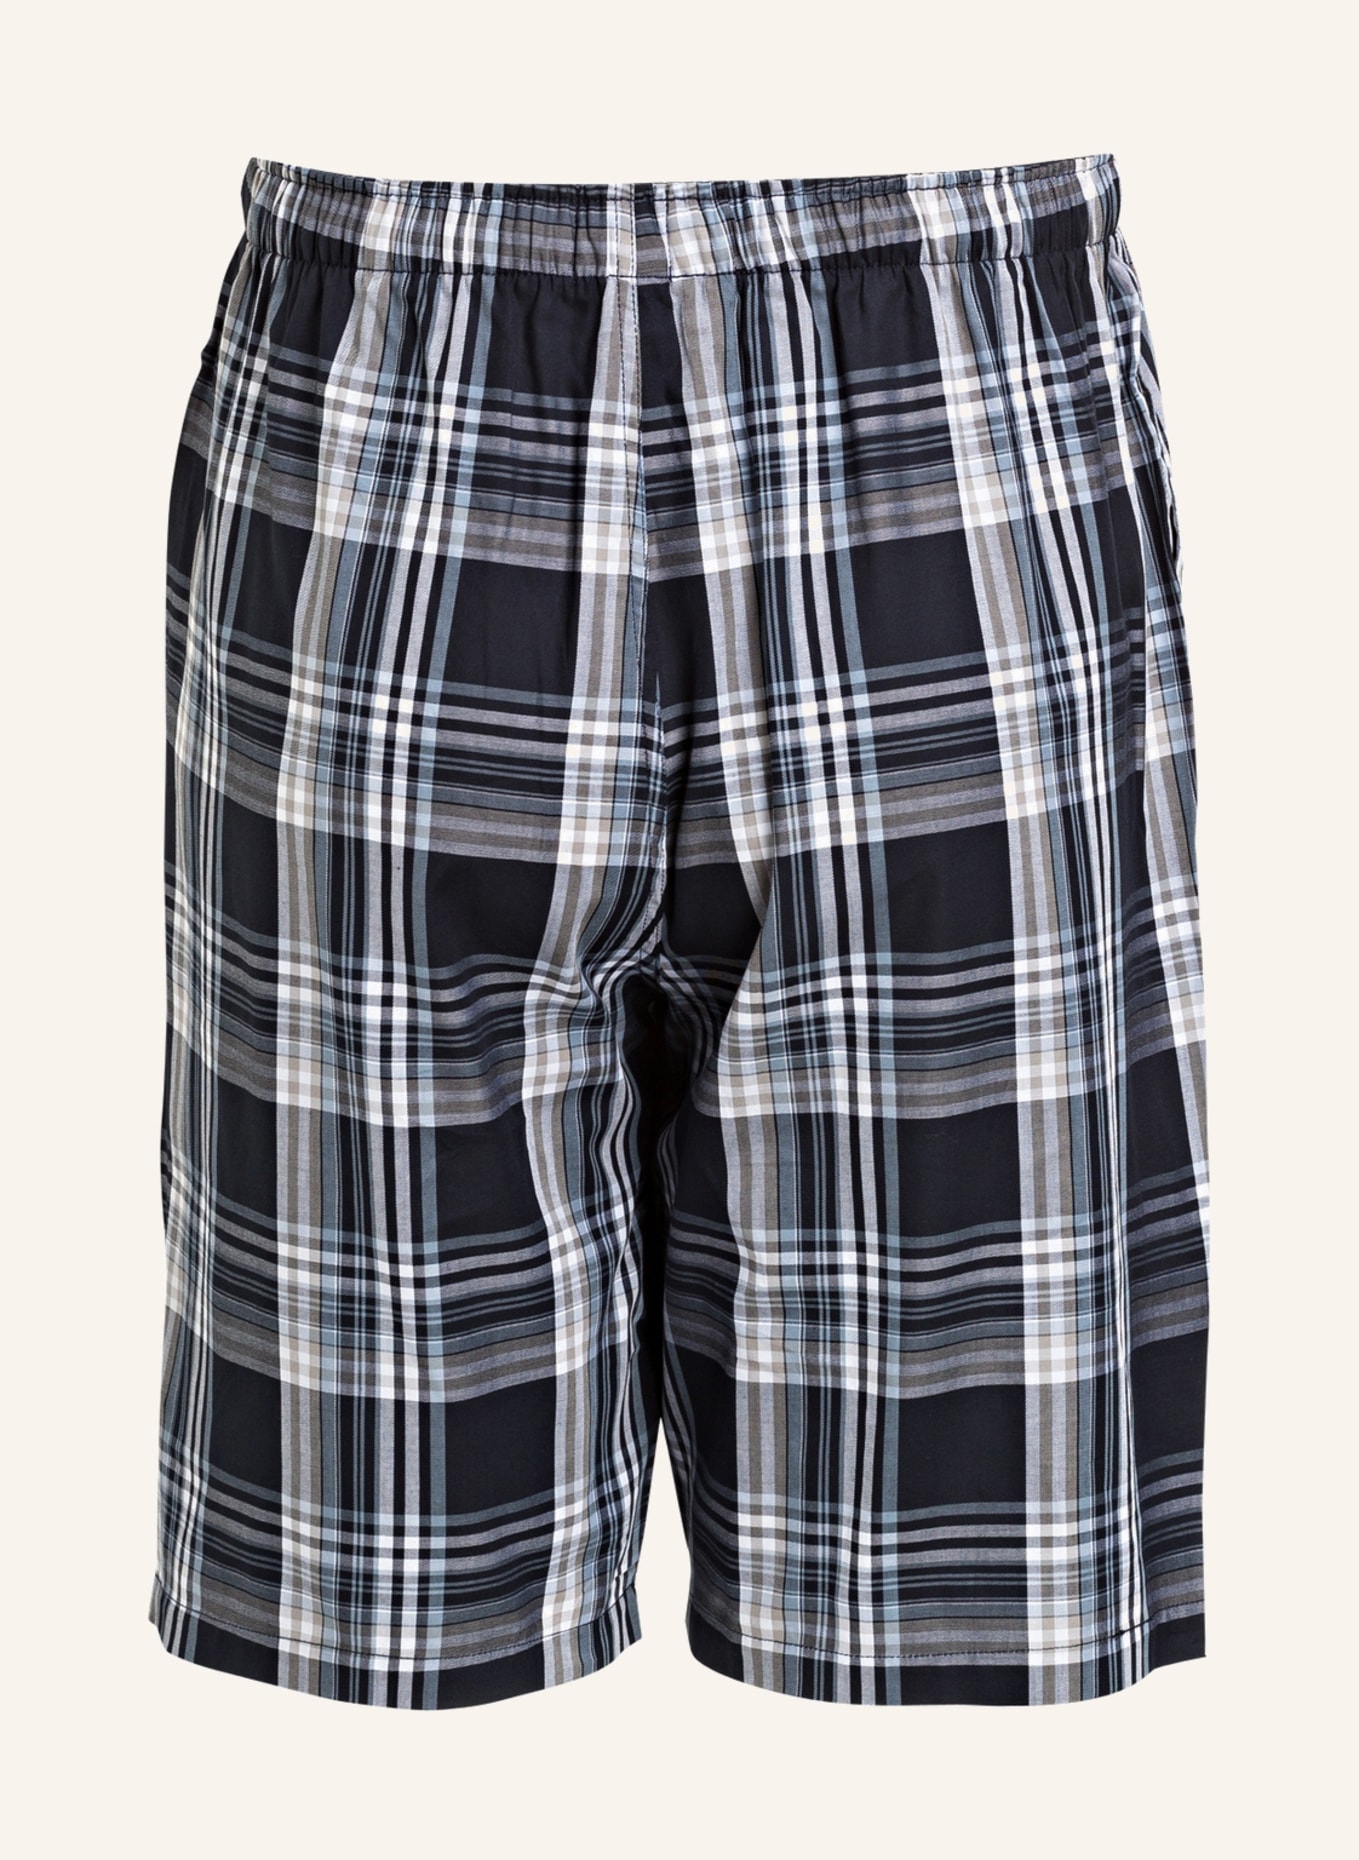 SCHIESSER Pajama shorts, Color: DARK BLUE/WHITE/GRAY CHECK (Image 2)